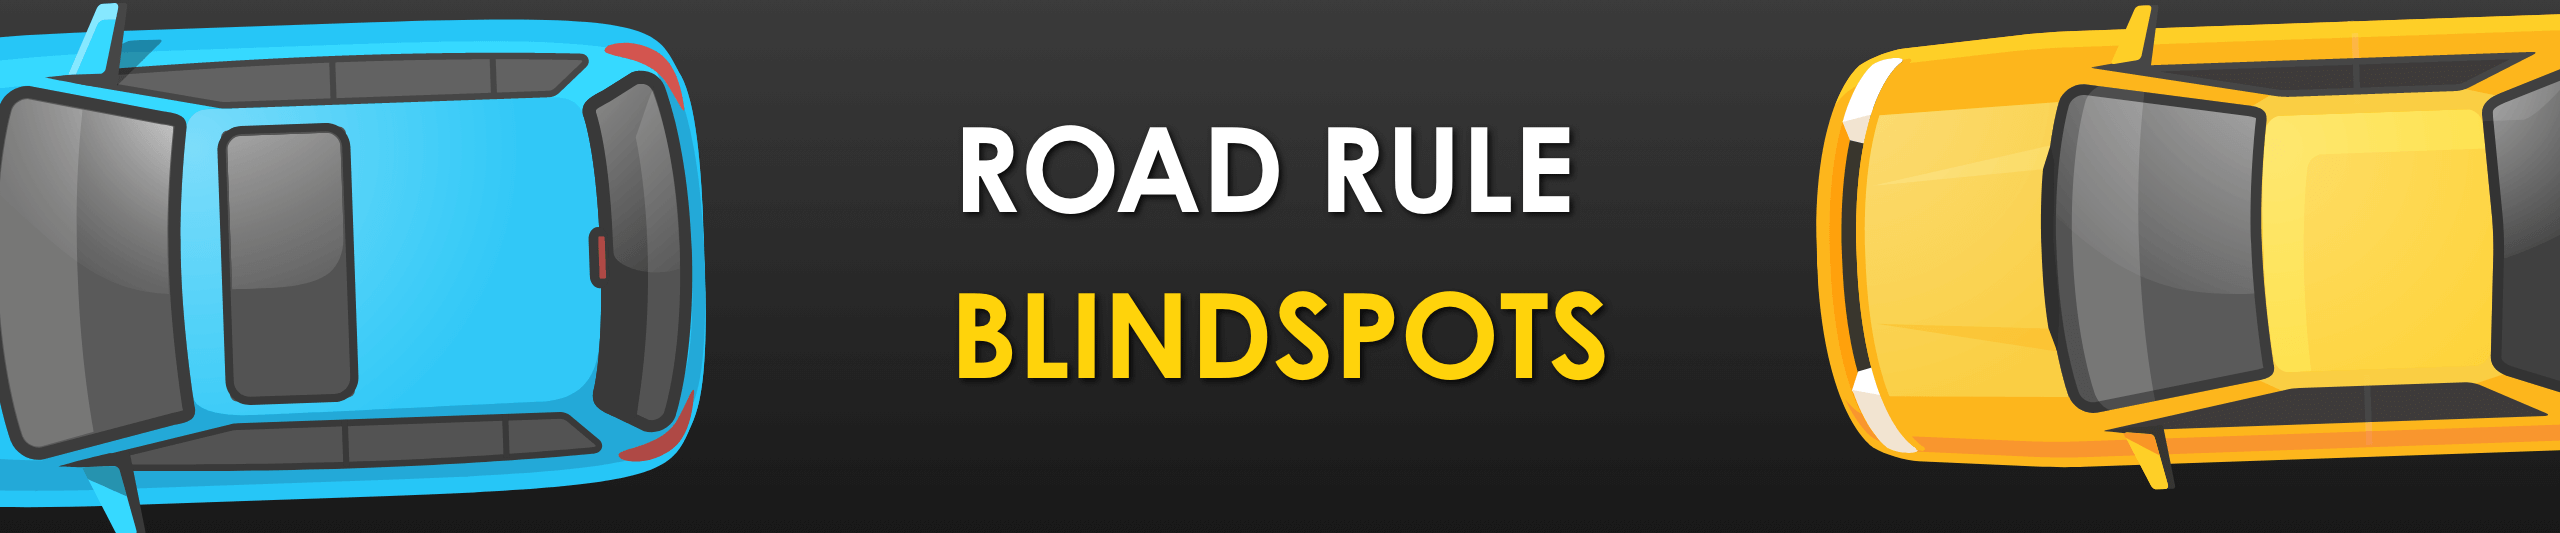 Drivers stall over road rule blindspots header image